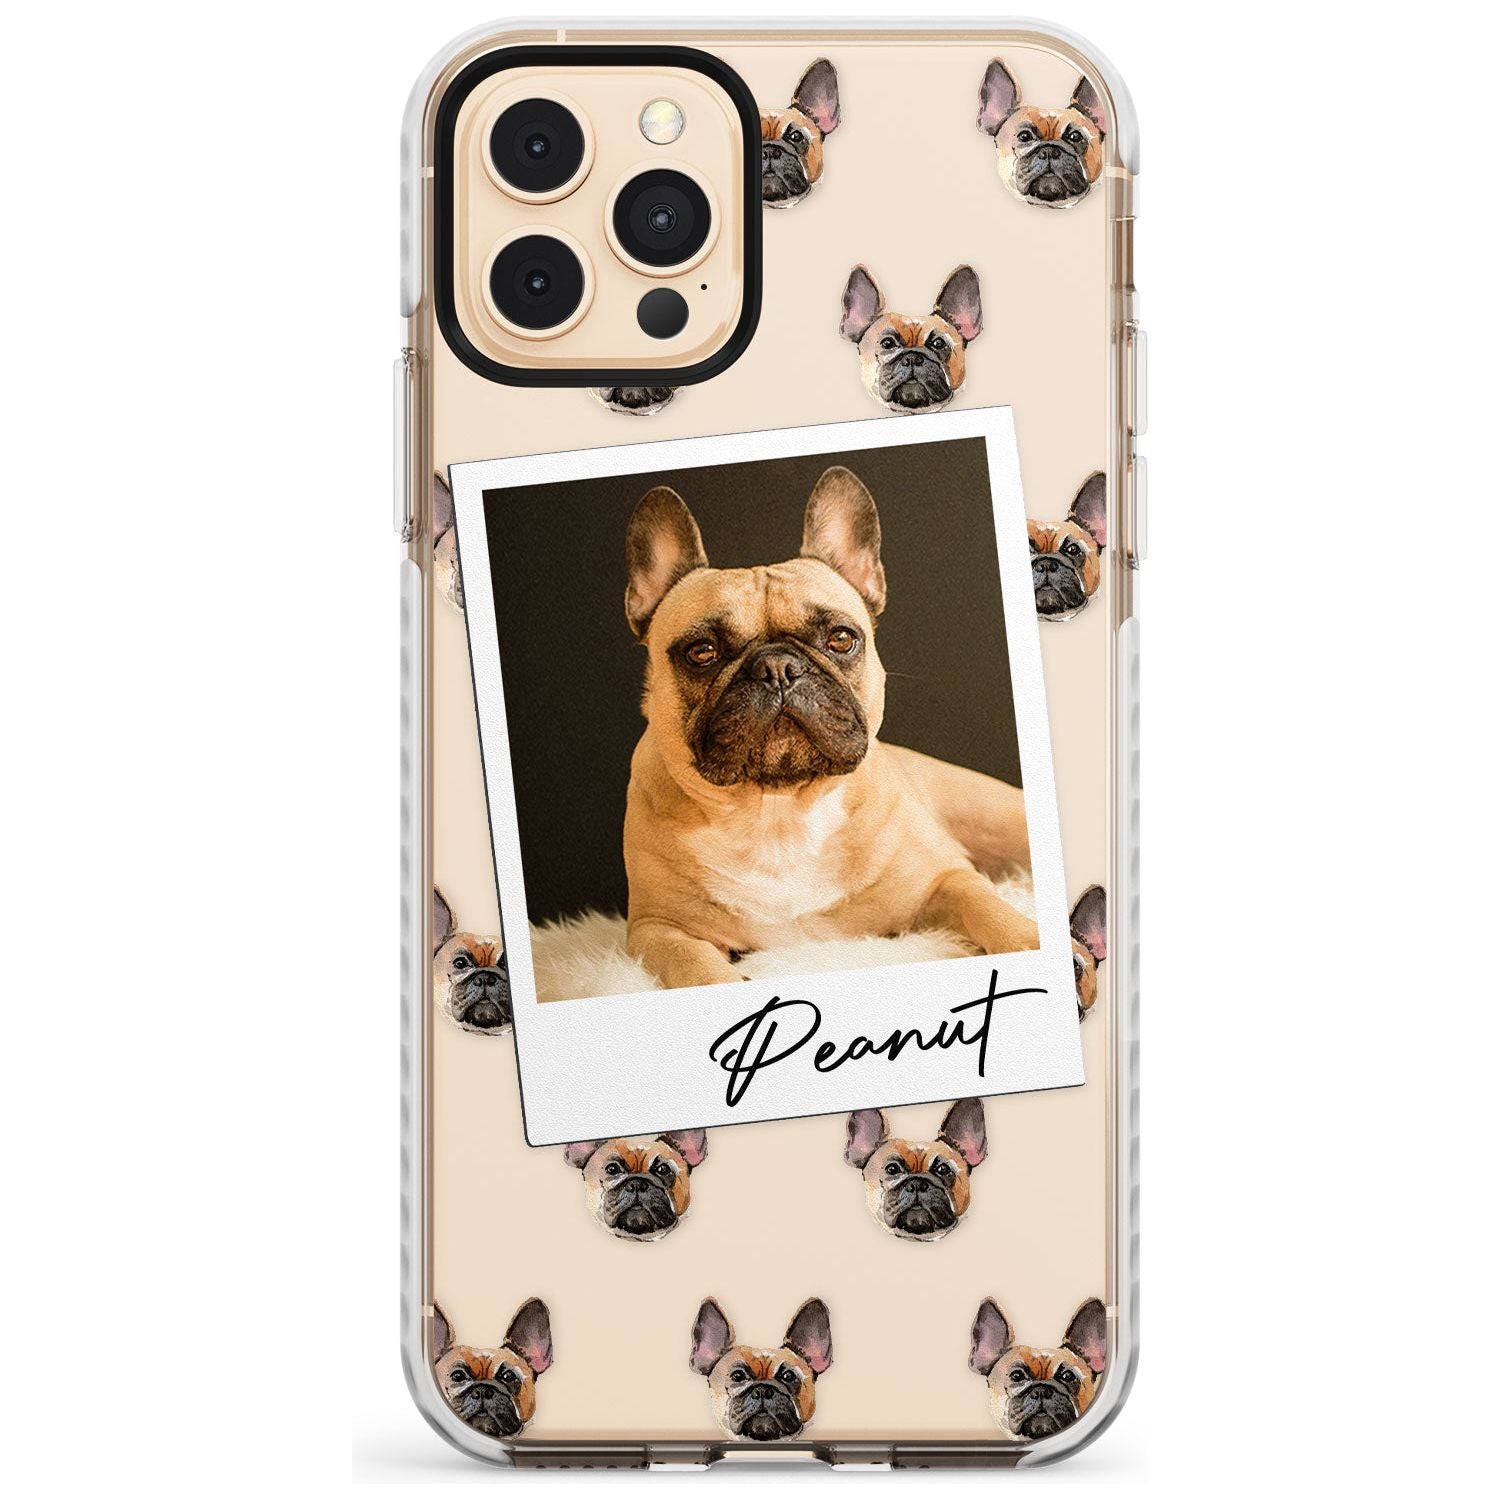 French Bulldog, Tan - Custom Dog Photo Slim TPU Phone Case for iPhone 11 Pro Max